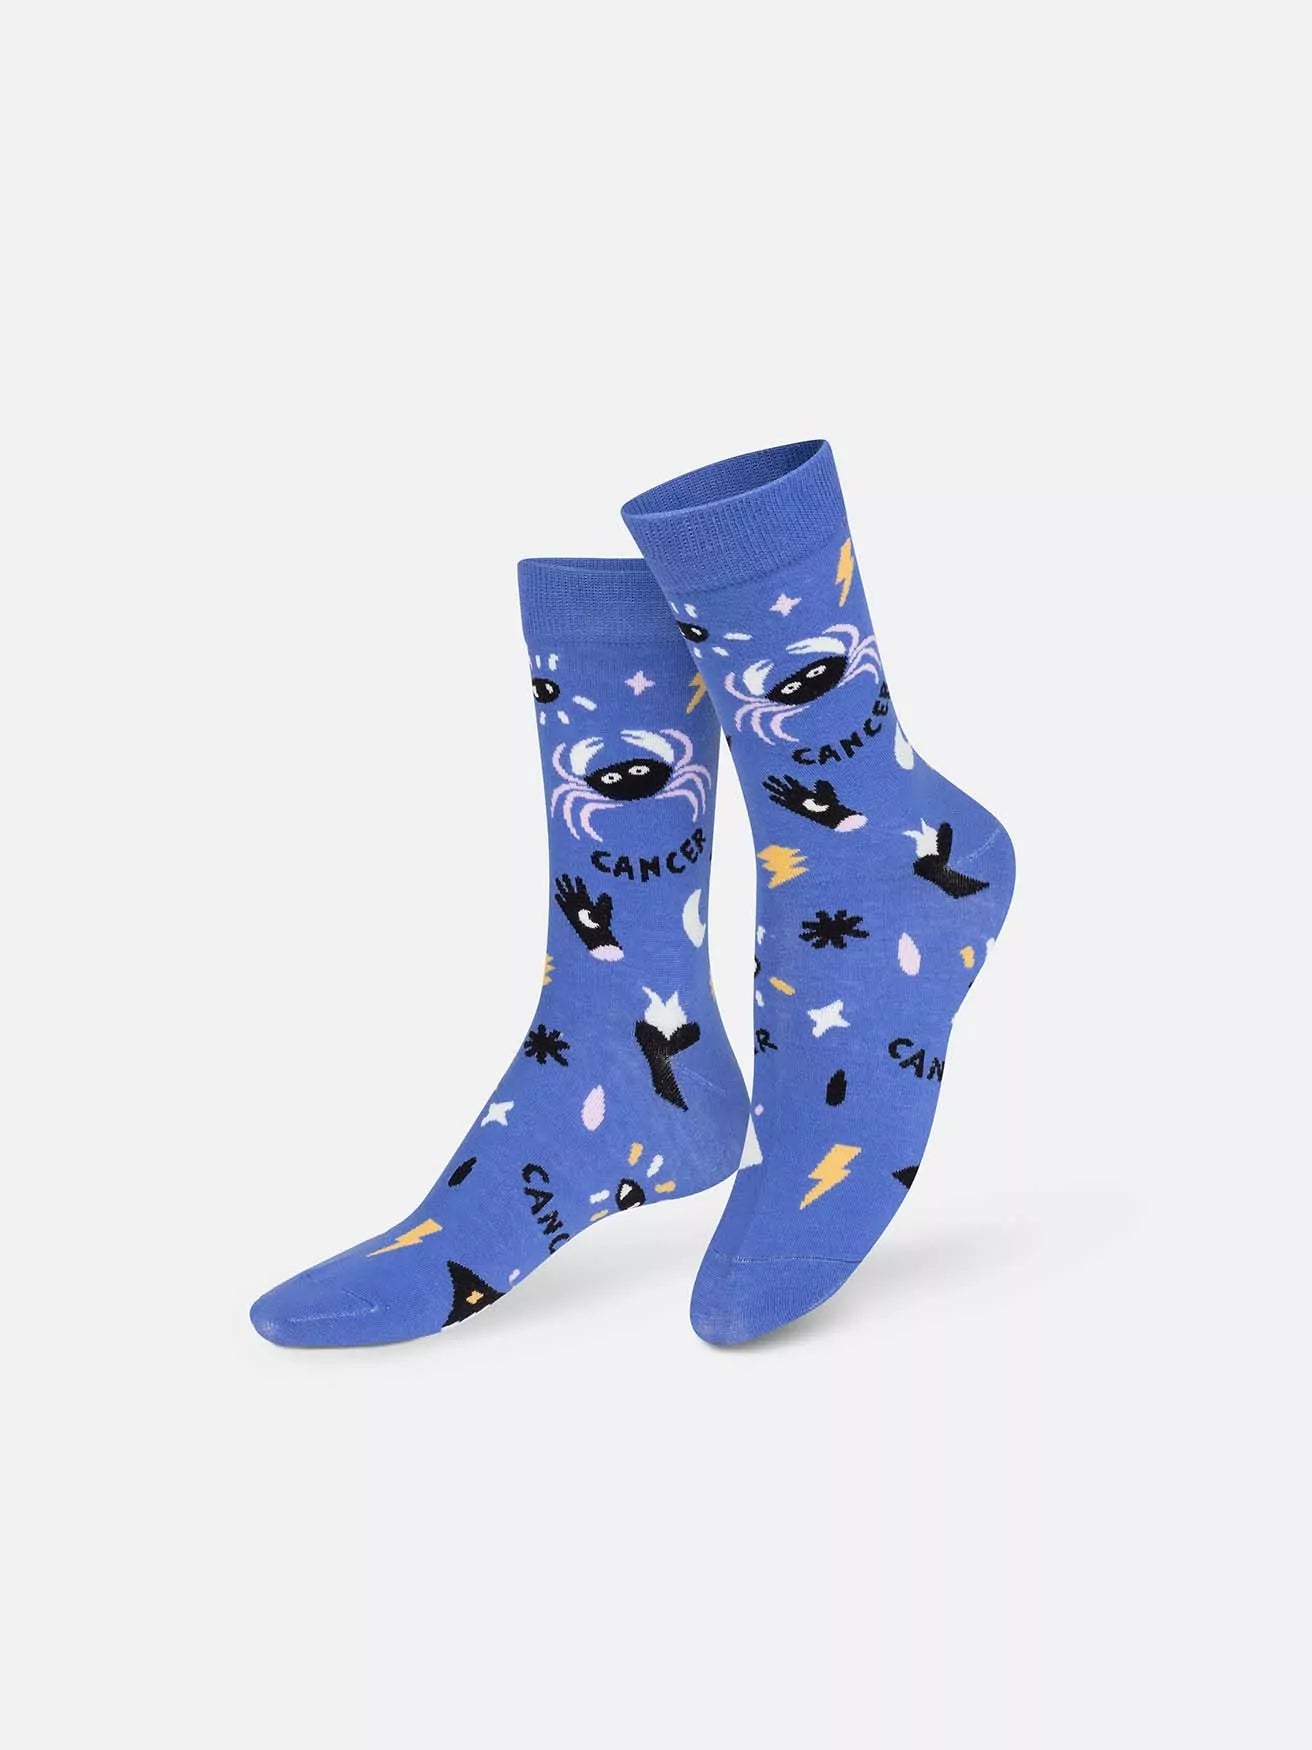 
                  
                    Zodiac Cancer Socks
                  
                